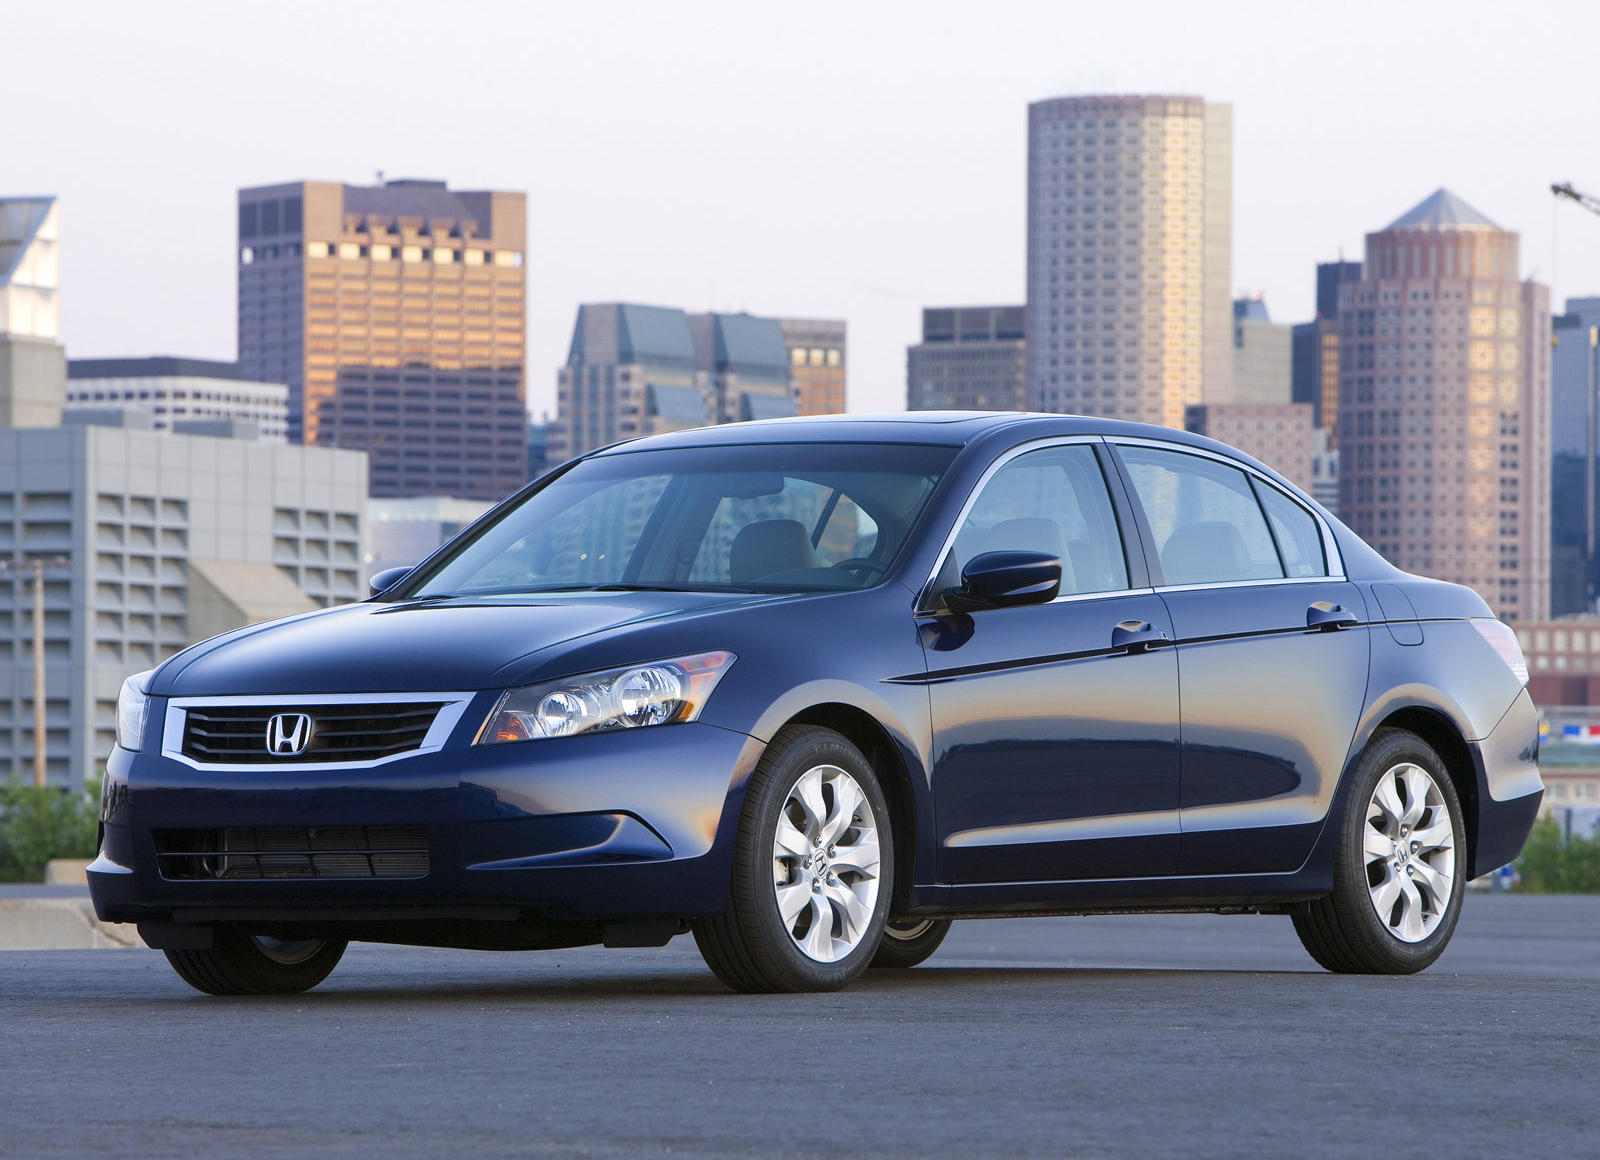 2009 Honda Accord Sedan: Review, Trims, Specs, Price, New Interior